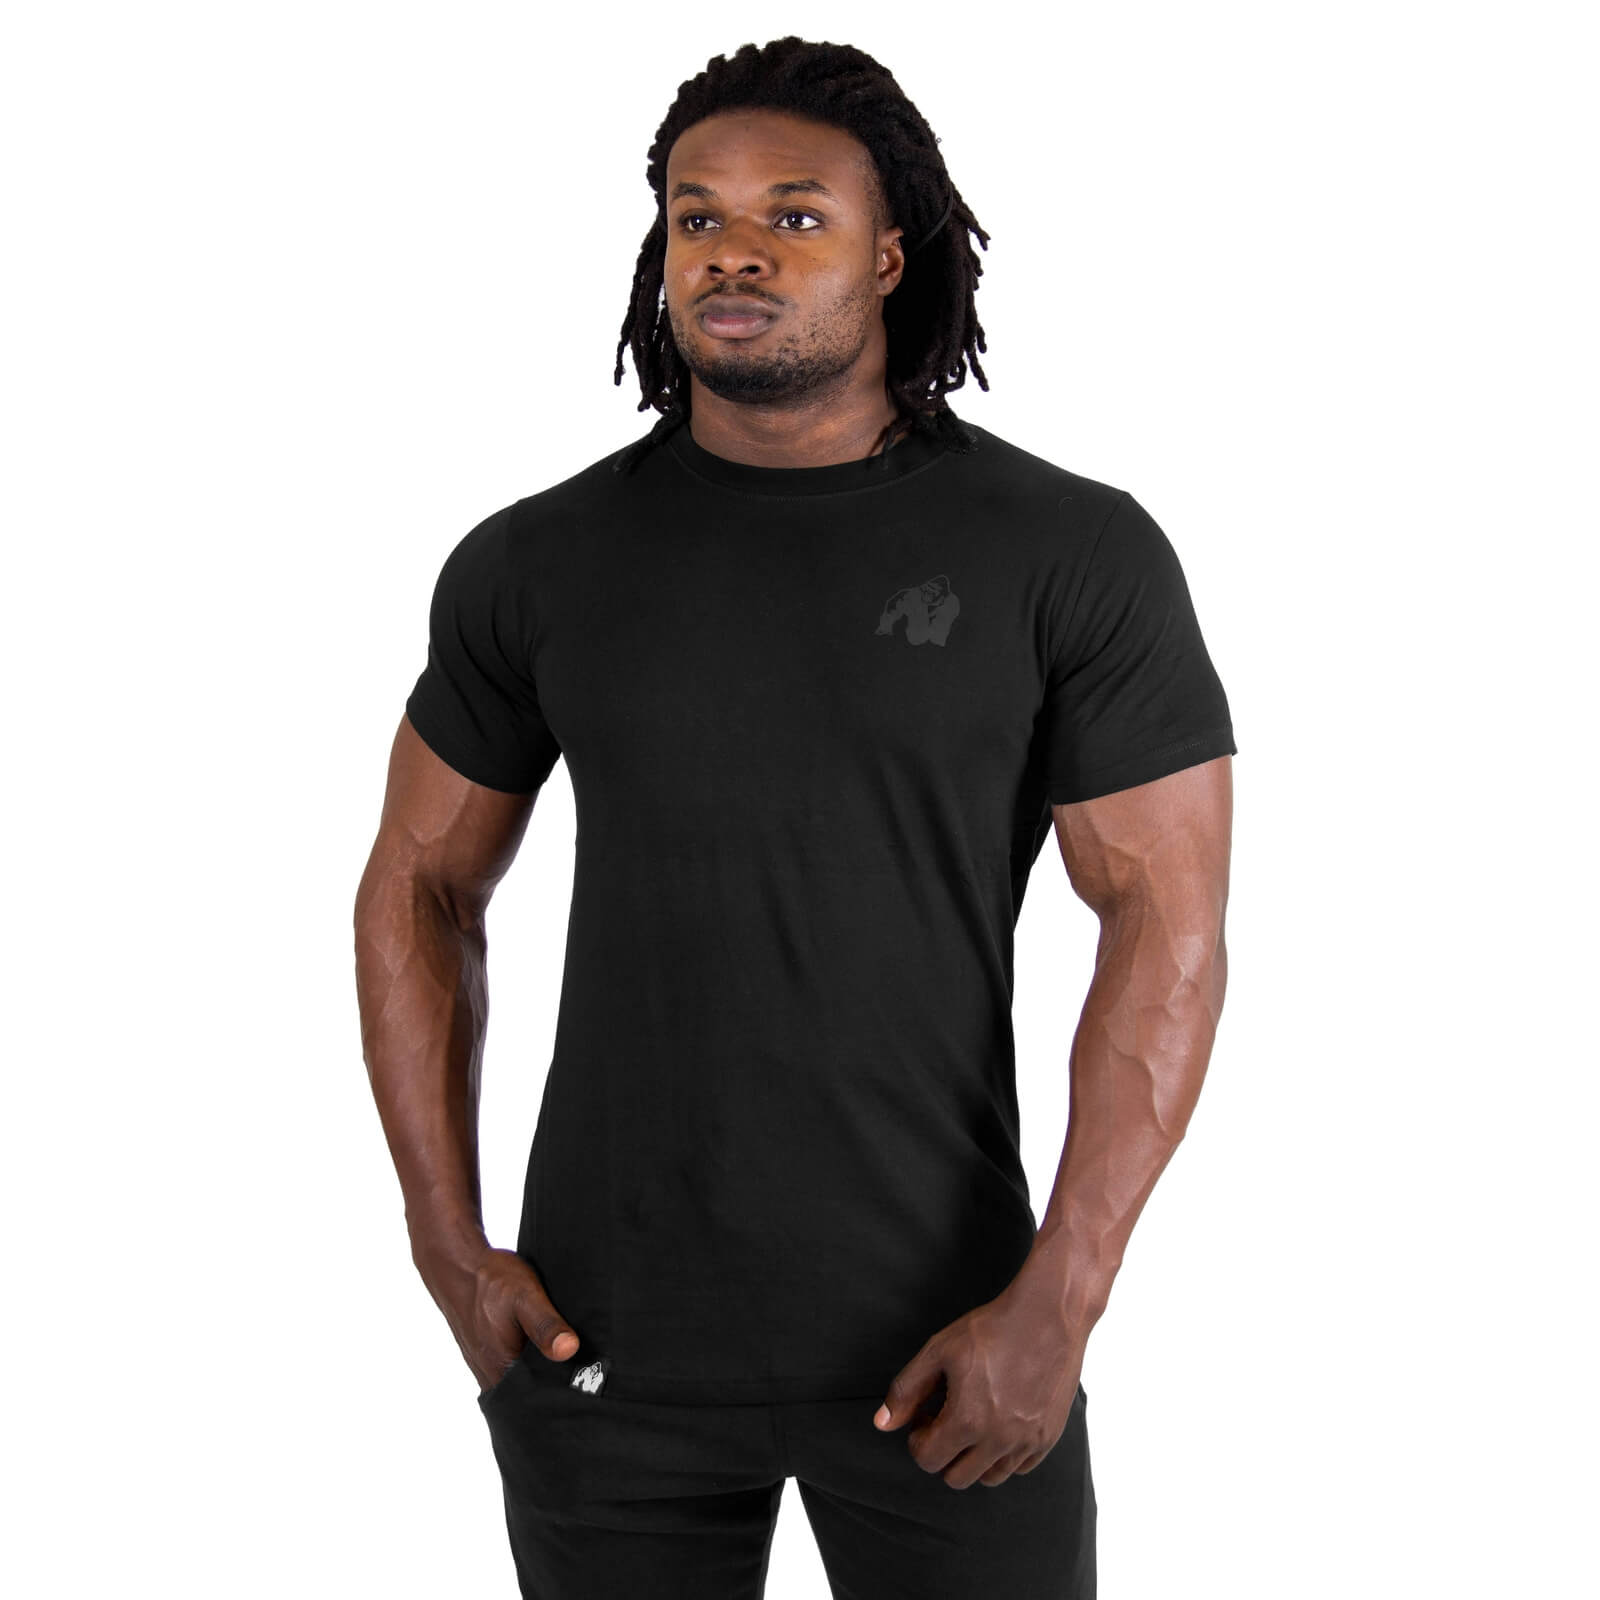 Bodega T-Shirt, black, Gorilla Wear